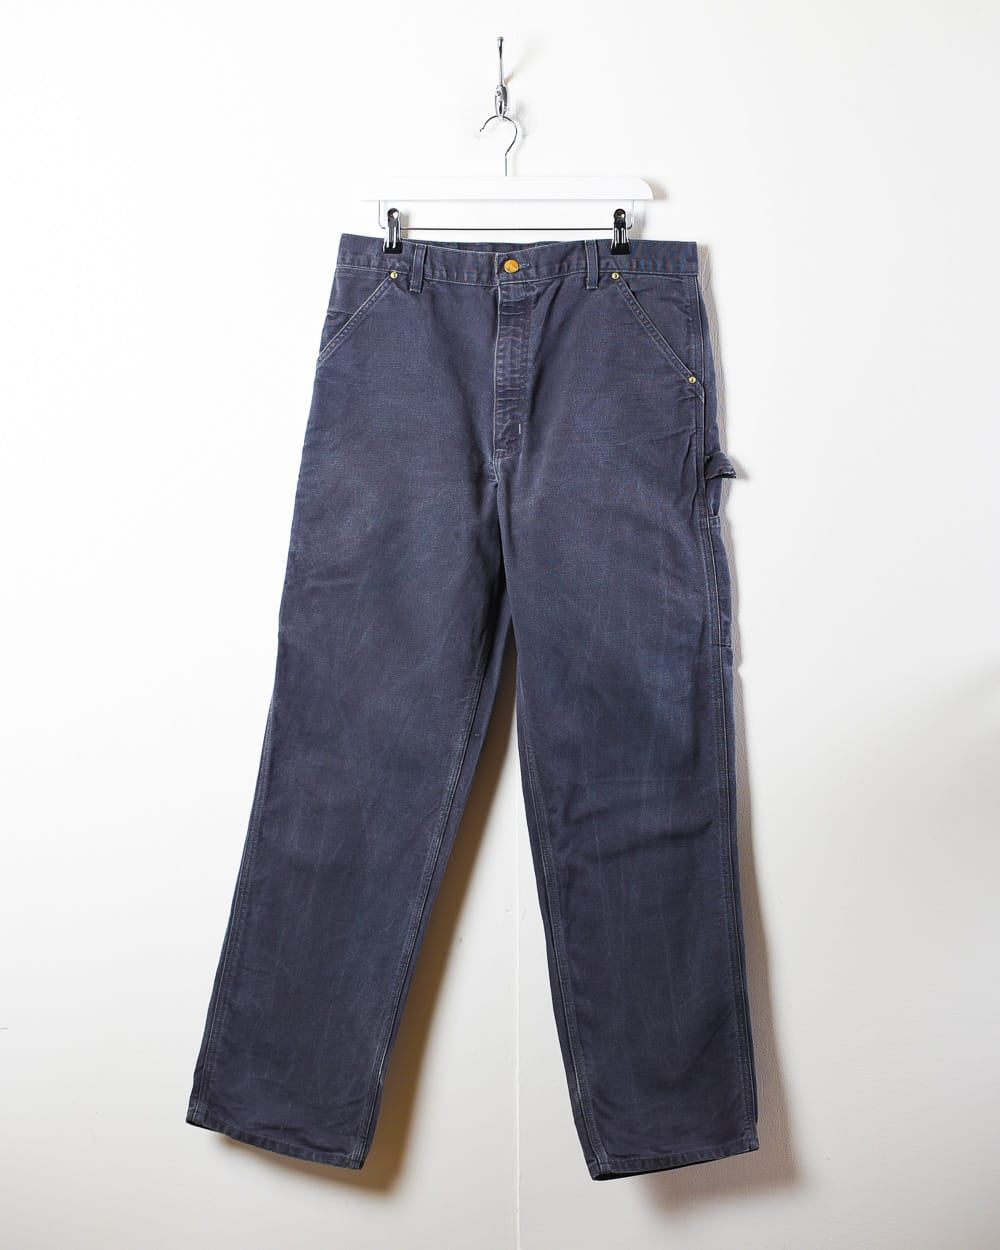 Brown Wranglers Corduroy Jeans - W38 L31